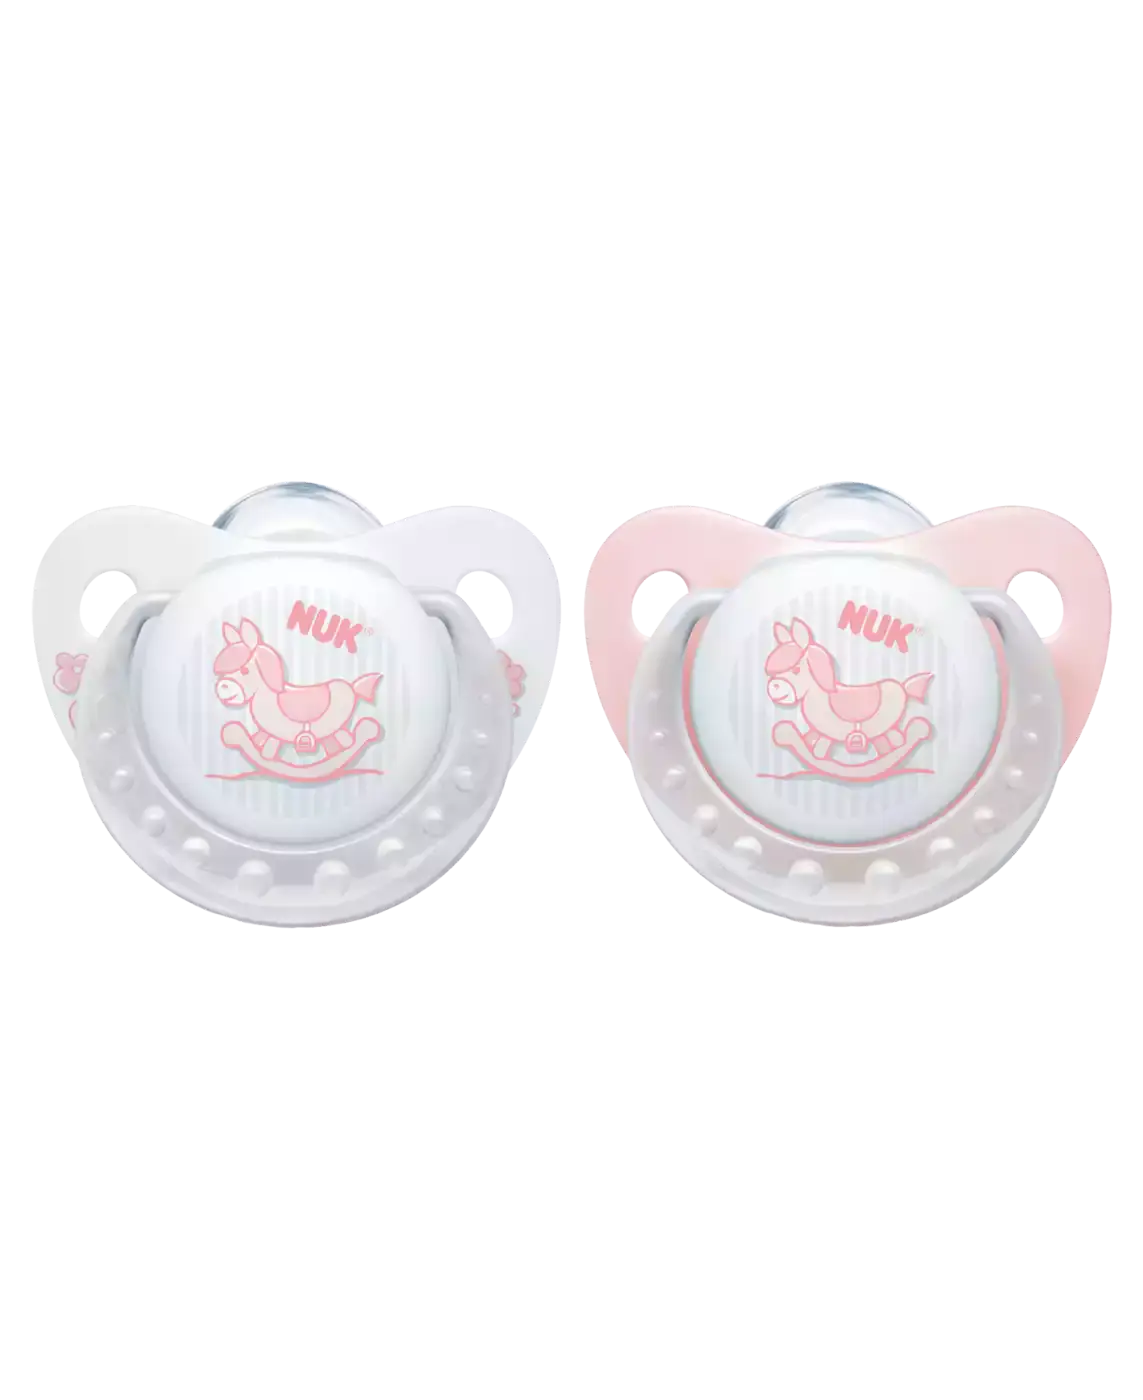 Baby Rose Trendline Silikon-Schnuller 6-18 Monate NUK Beige Pink Transparent Rosa Weiß 2000571029507 3